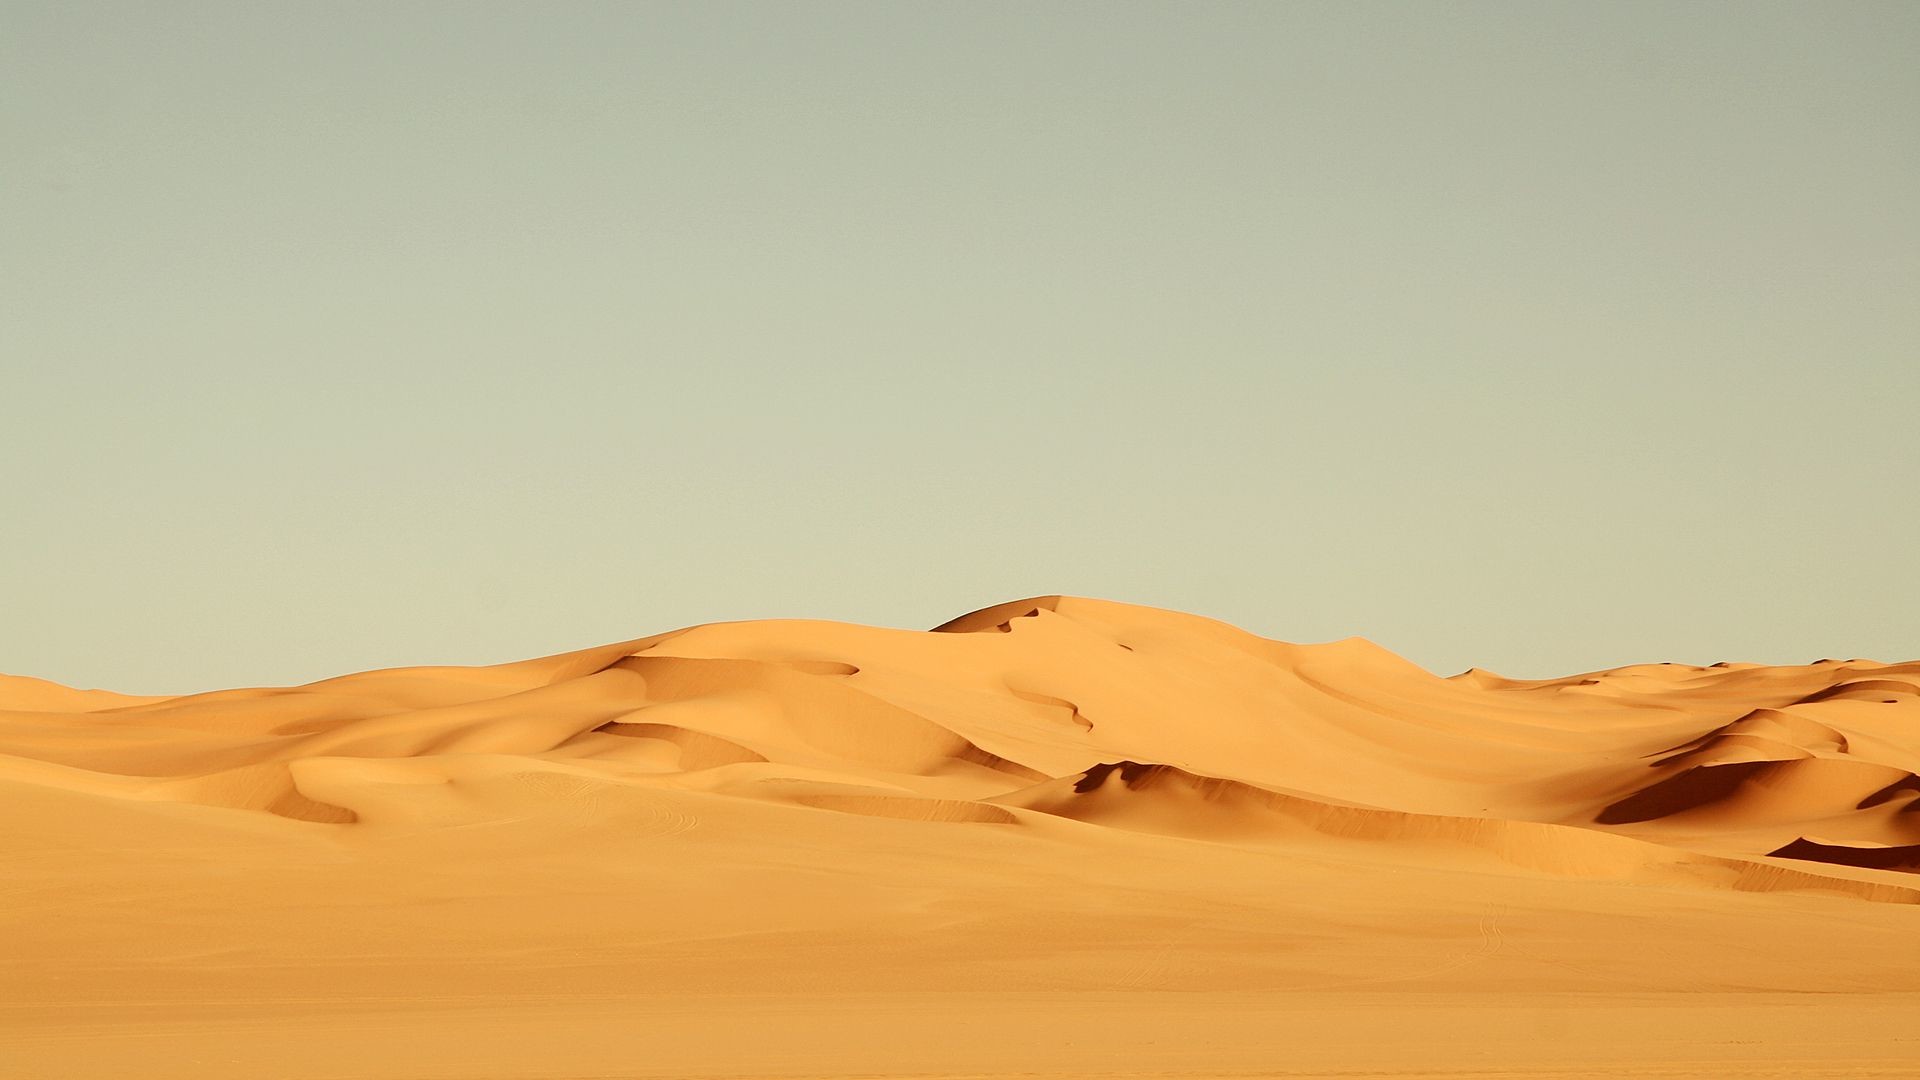 1920x1080 Desert Background